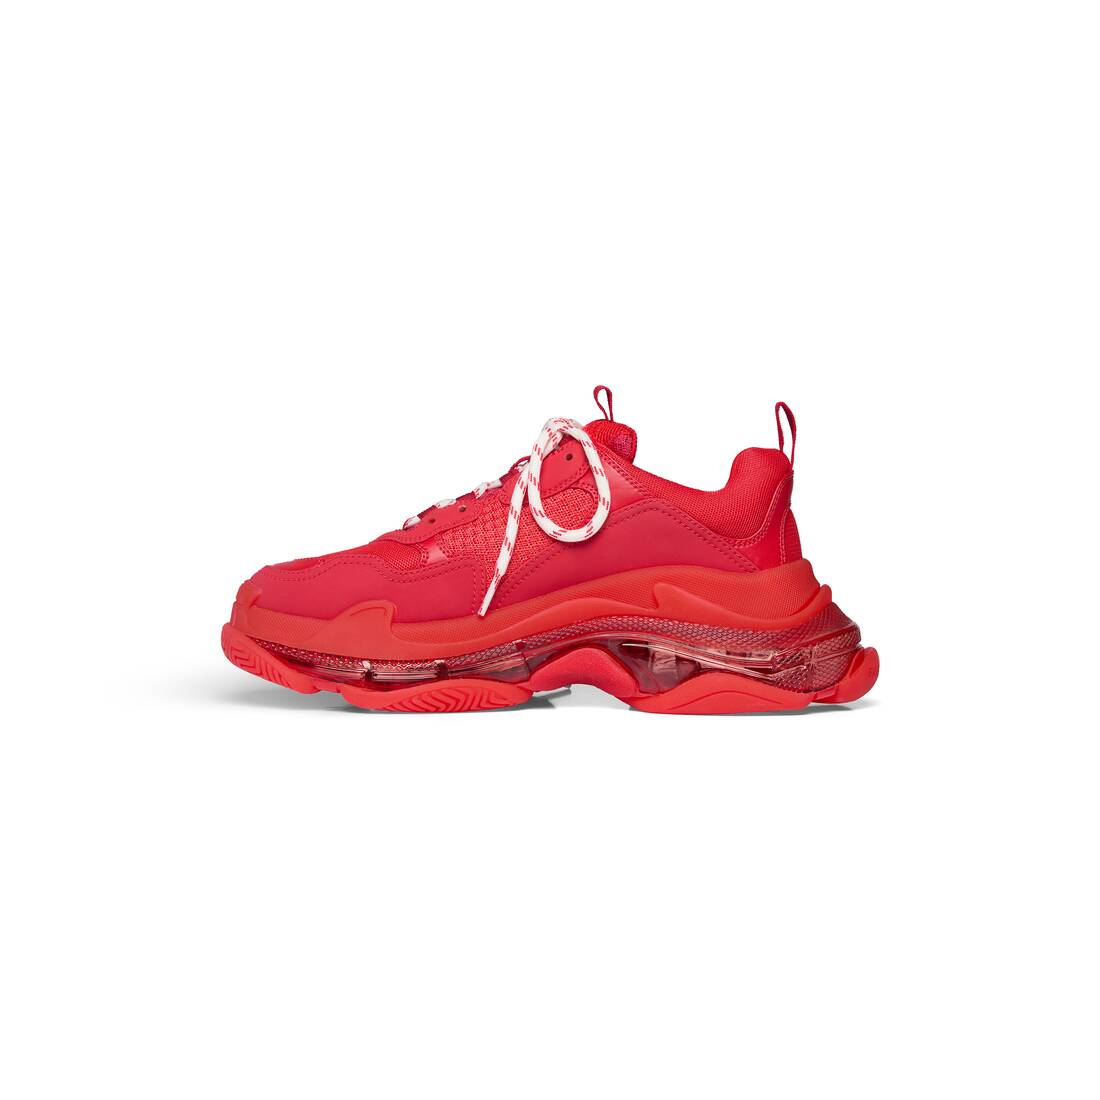 Red Balenciaga triple s - The Shoe Box